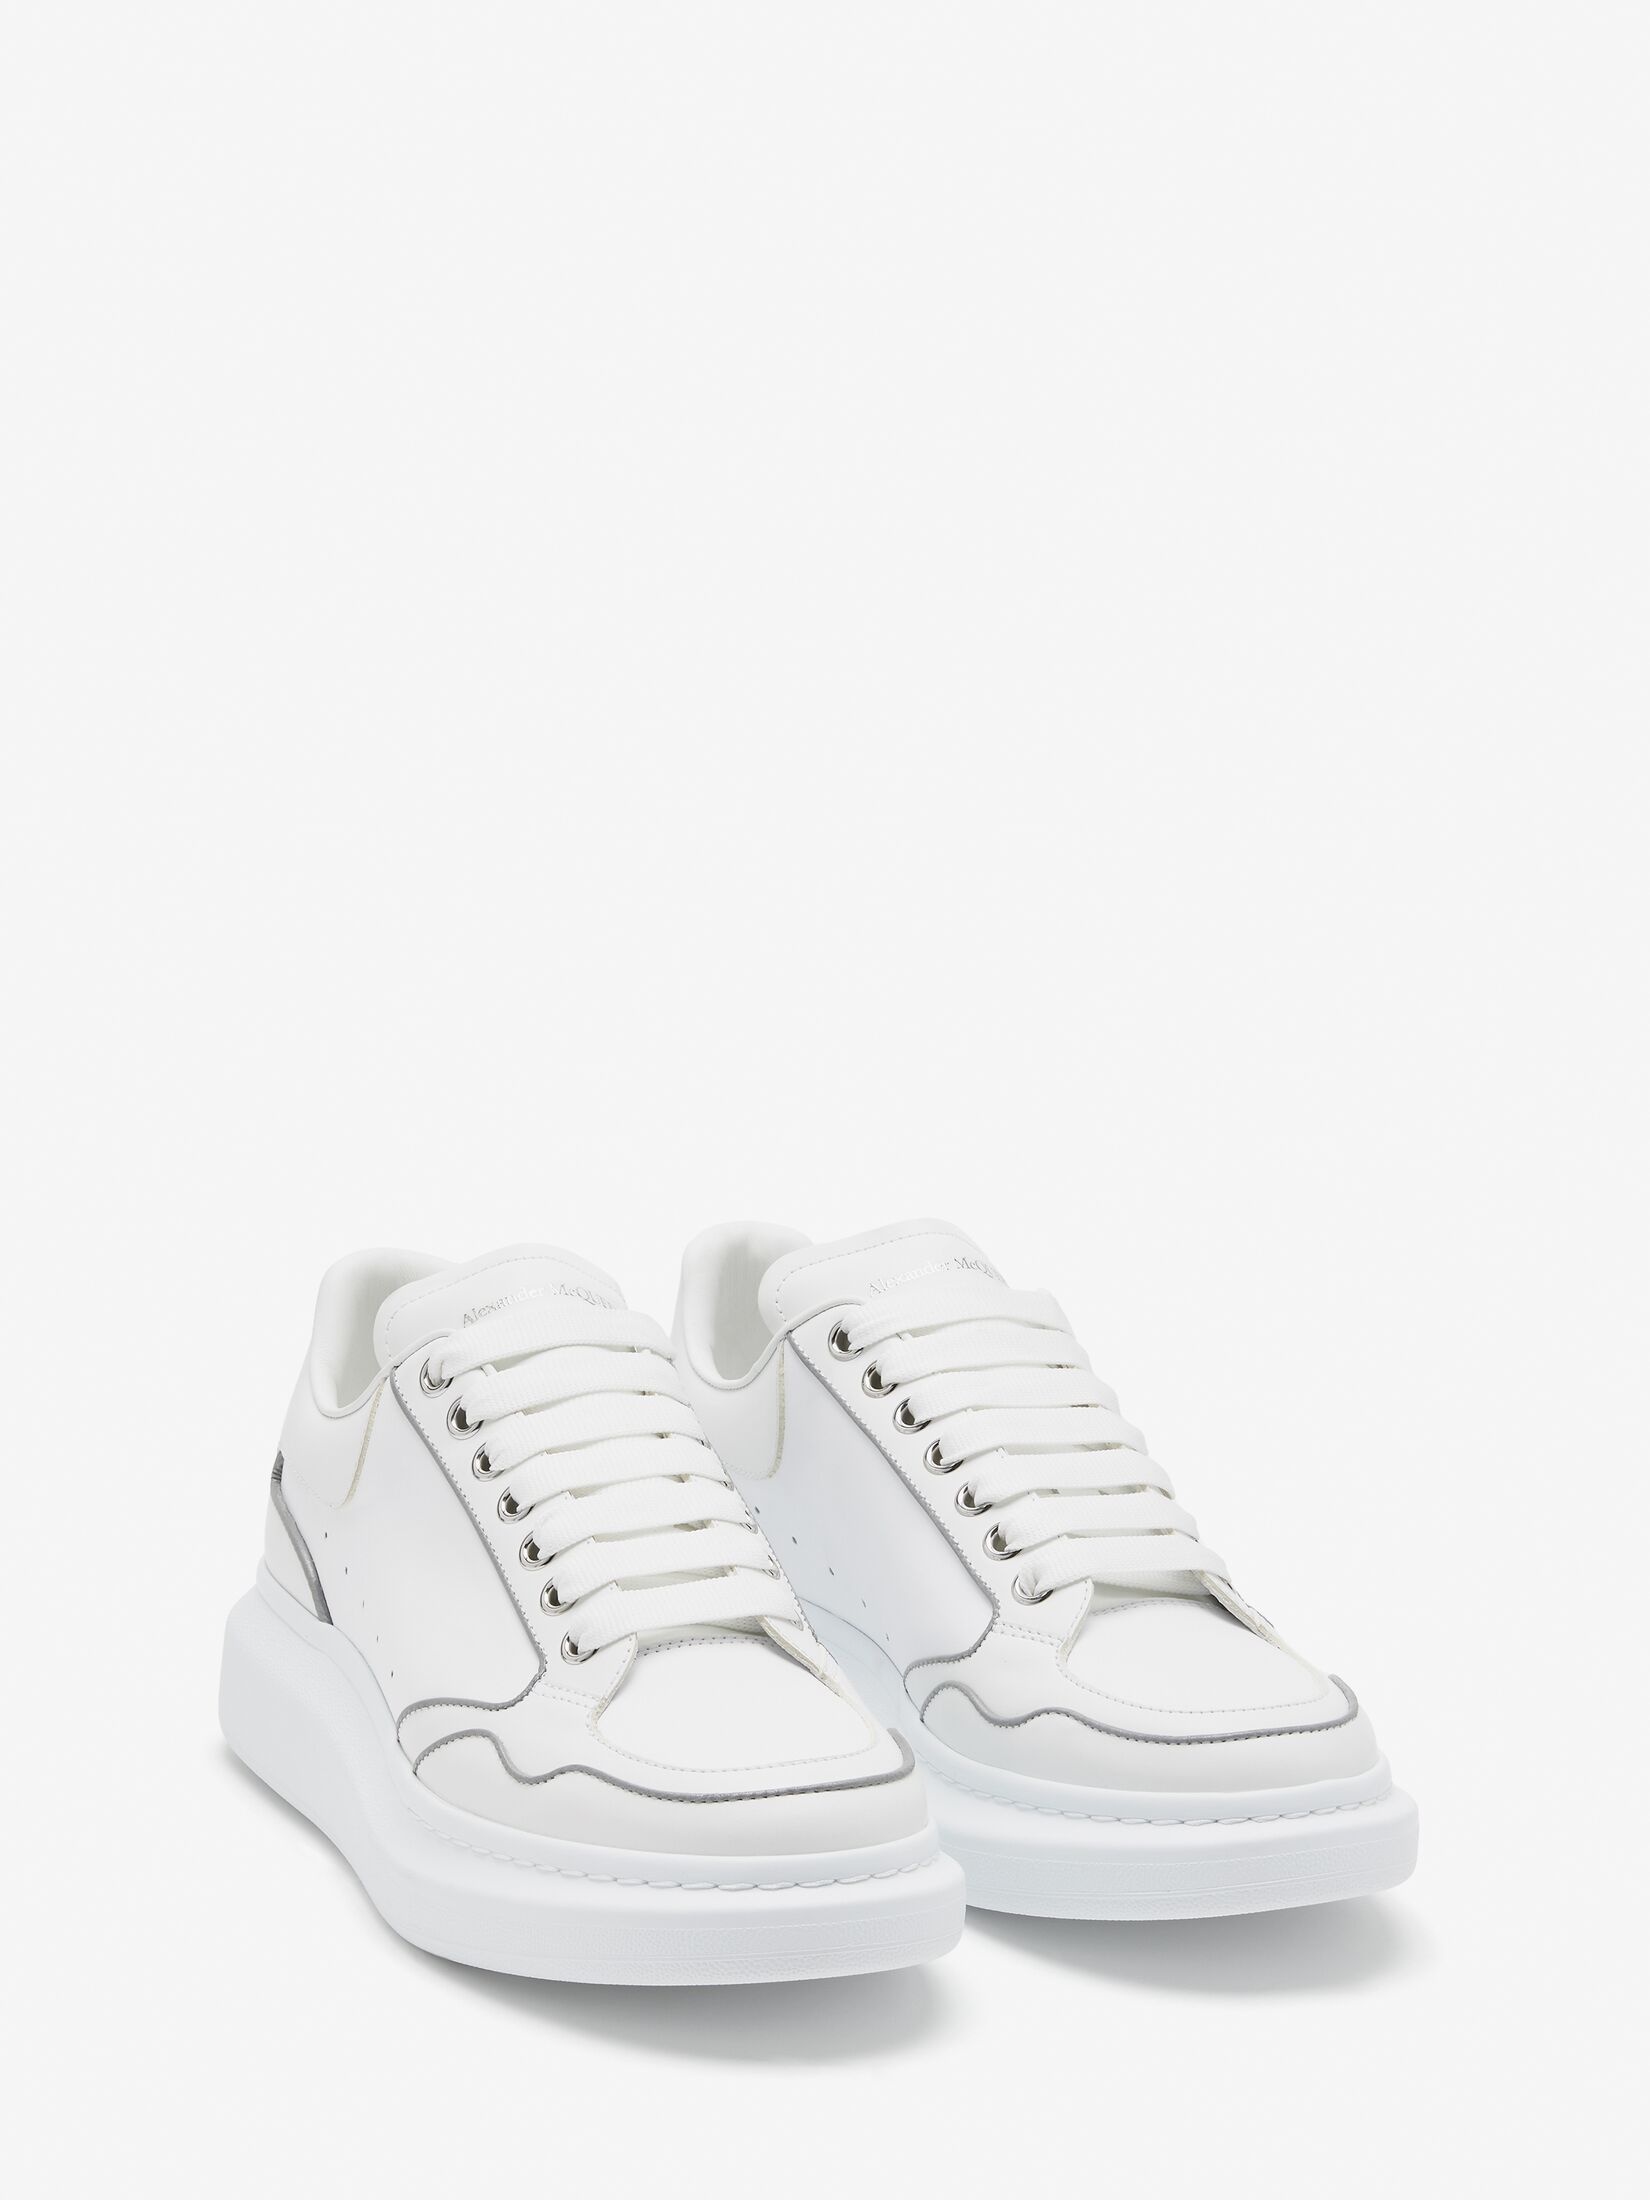 Men's Oversized Sneaker in White/silver - 2